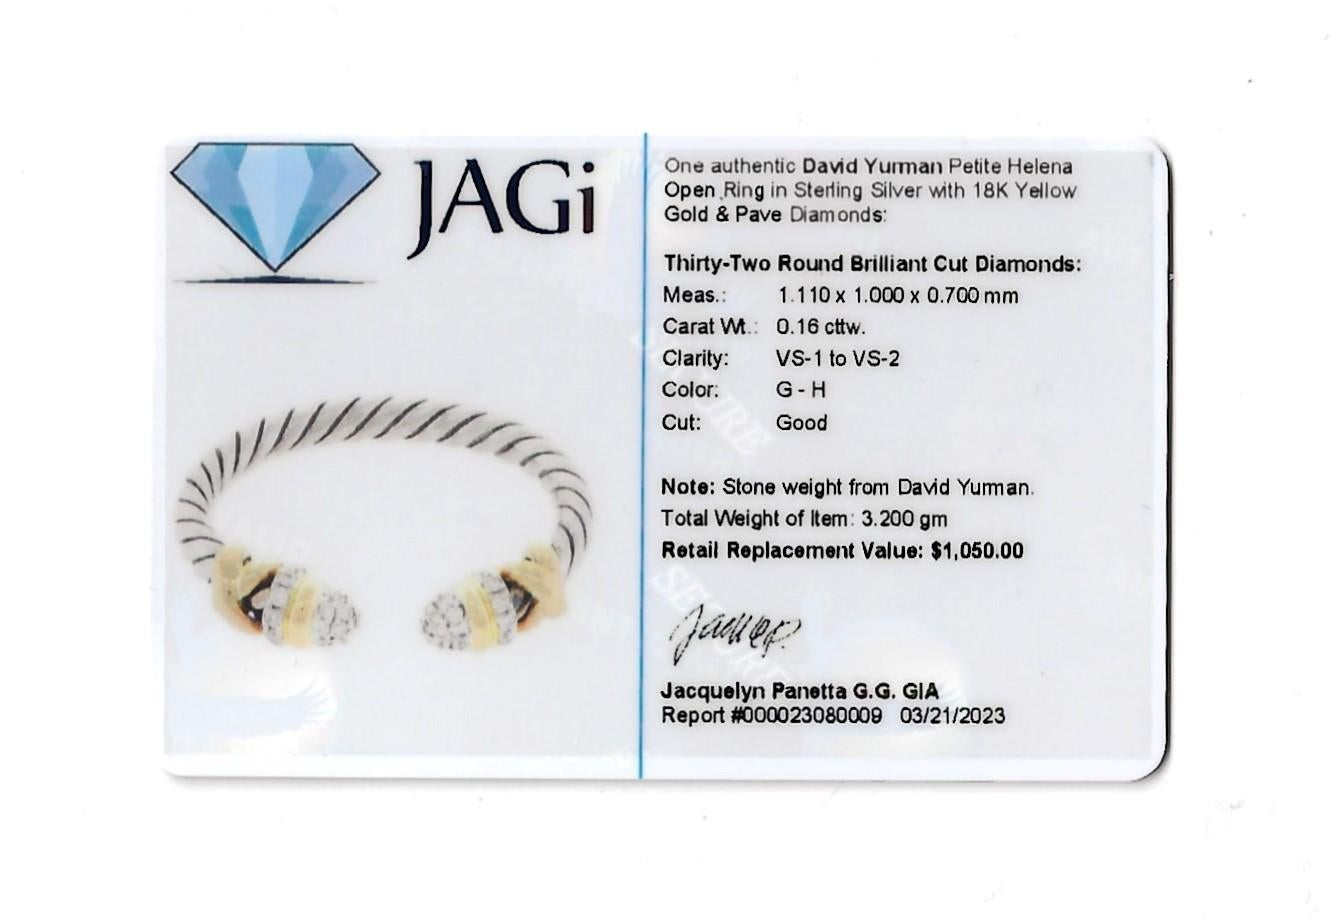 David Yurman Petite Helena Ring with Diamonds Sterling Silver and 18 Karat Gold 4